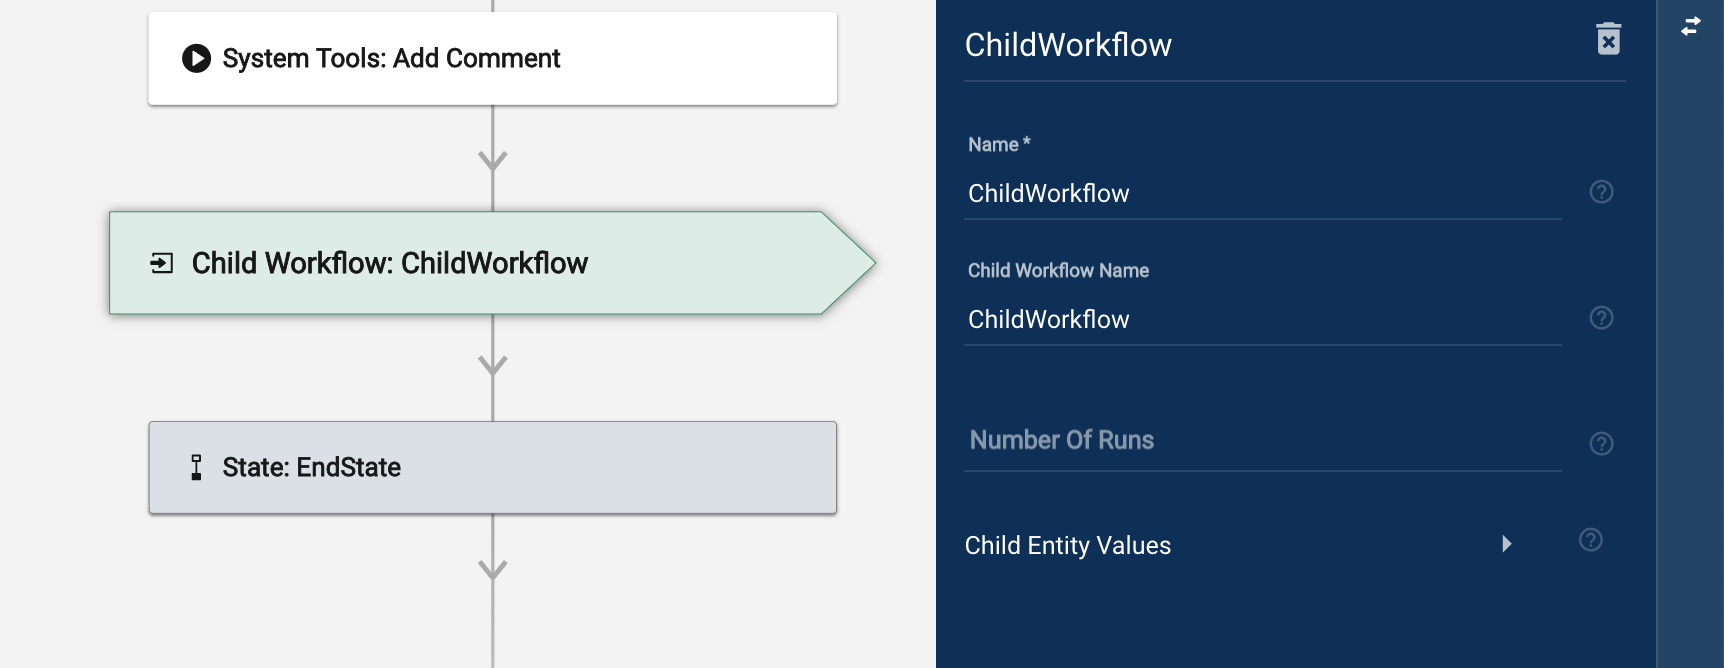 Parent Workflow's Child Workflow Module Setup